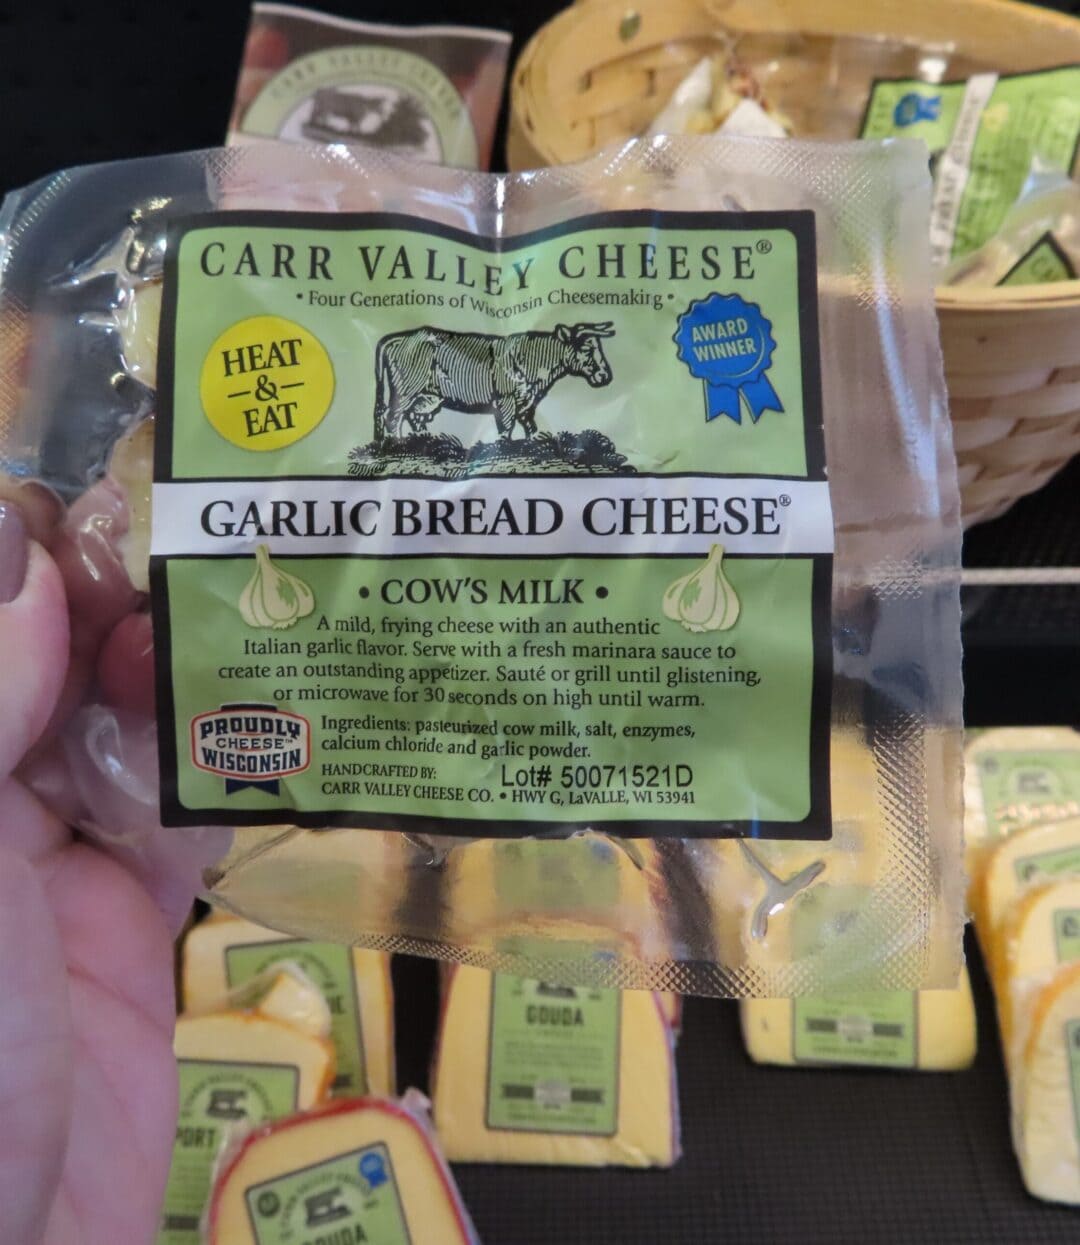 Garlic bread cheese packaging